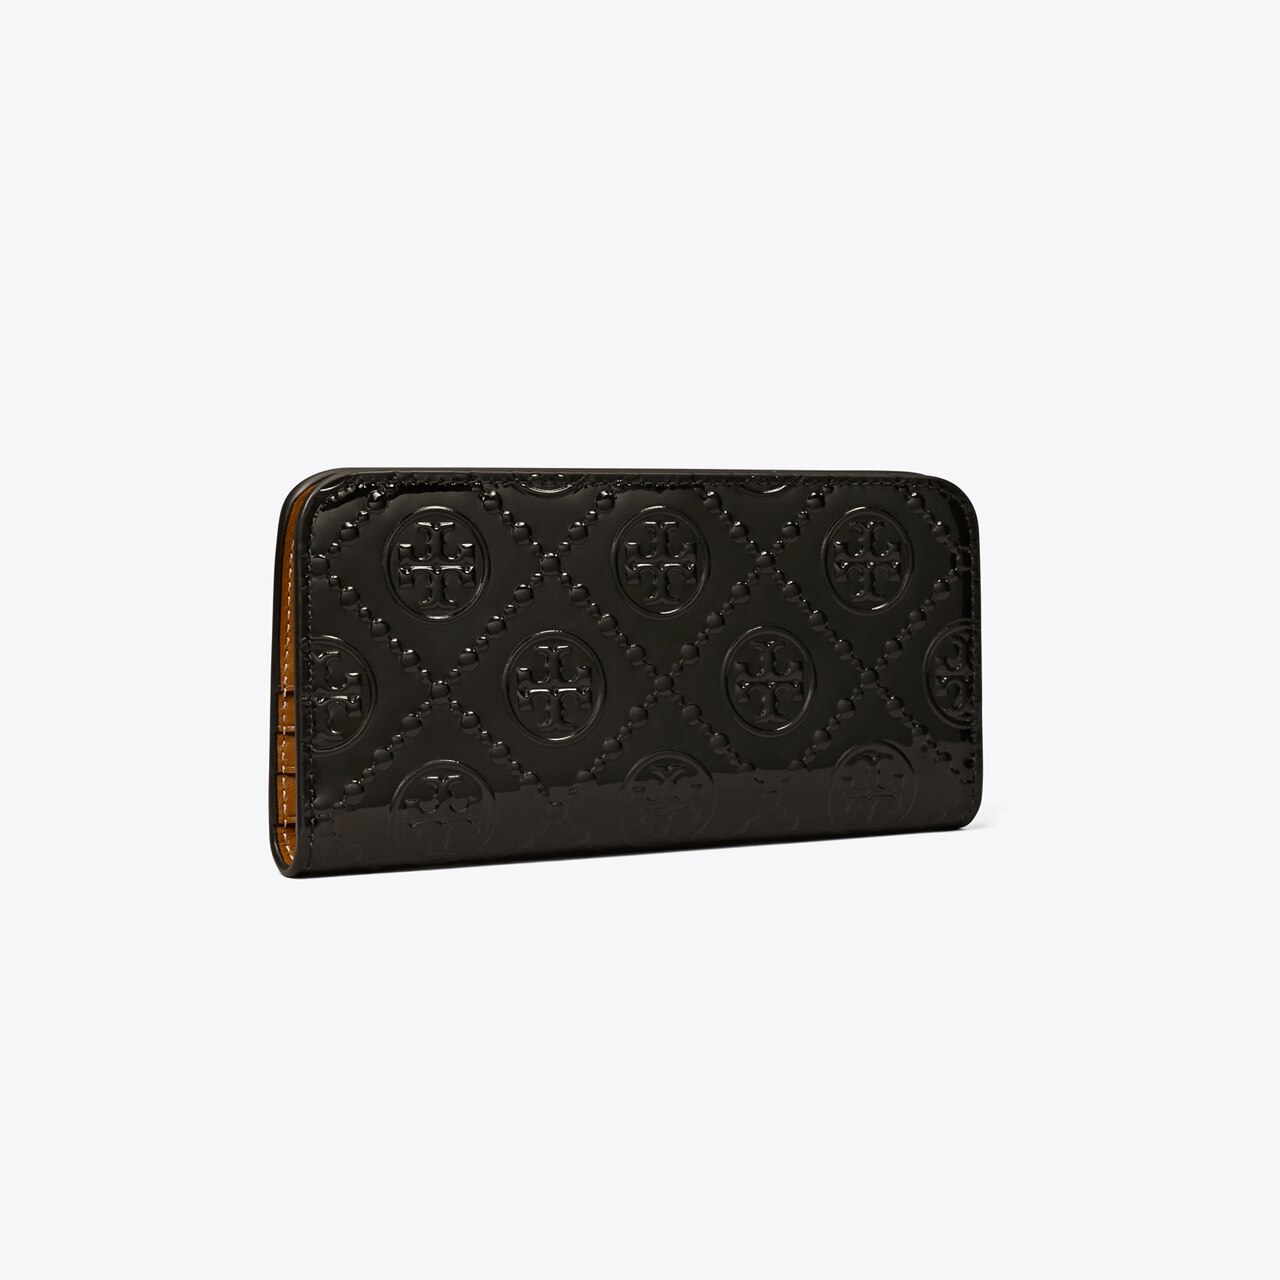 Louis Vuitton Leather Black Wallets for Women